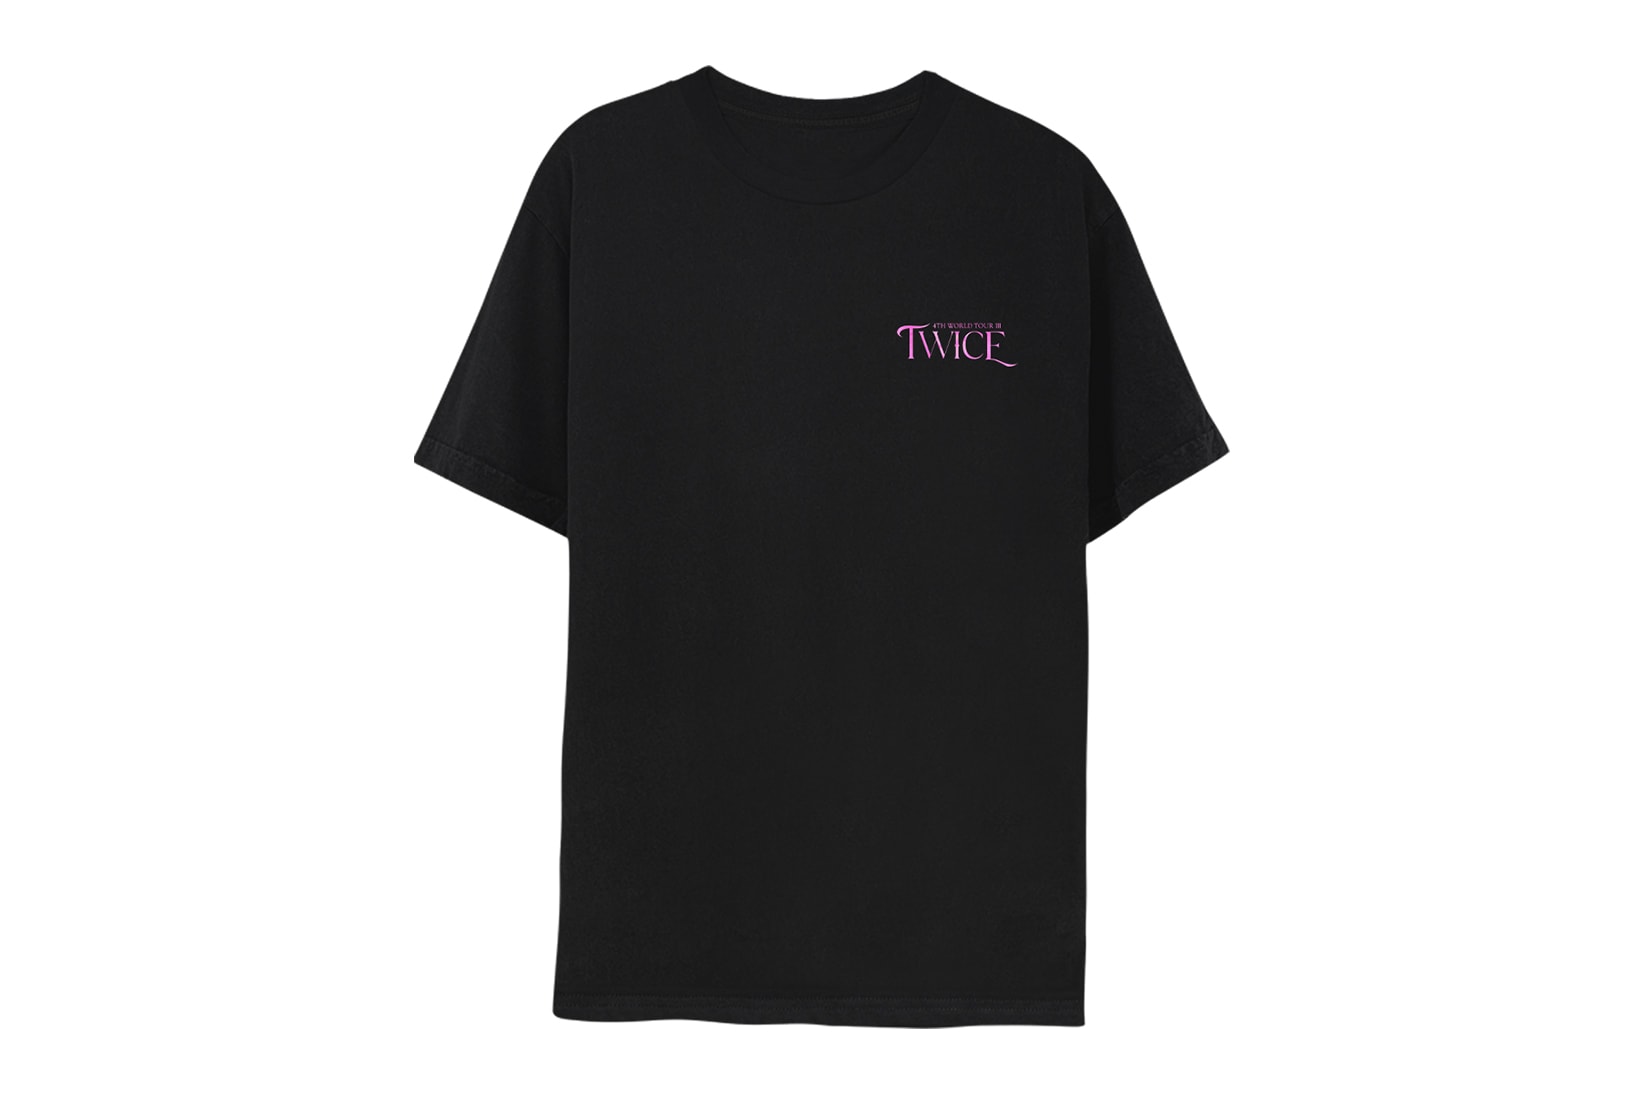 TWICE 4th World Tour Collection Merchandise Outerwear Accessories K-pop T-Shirt Floral Front